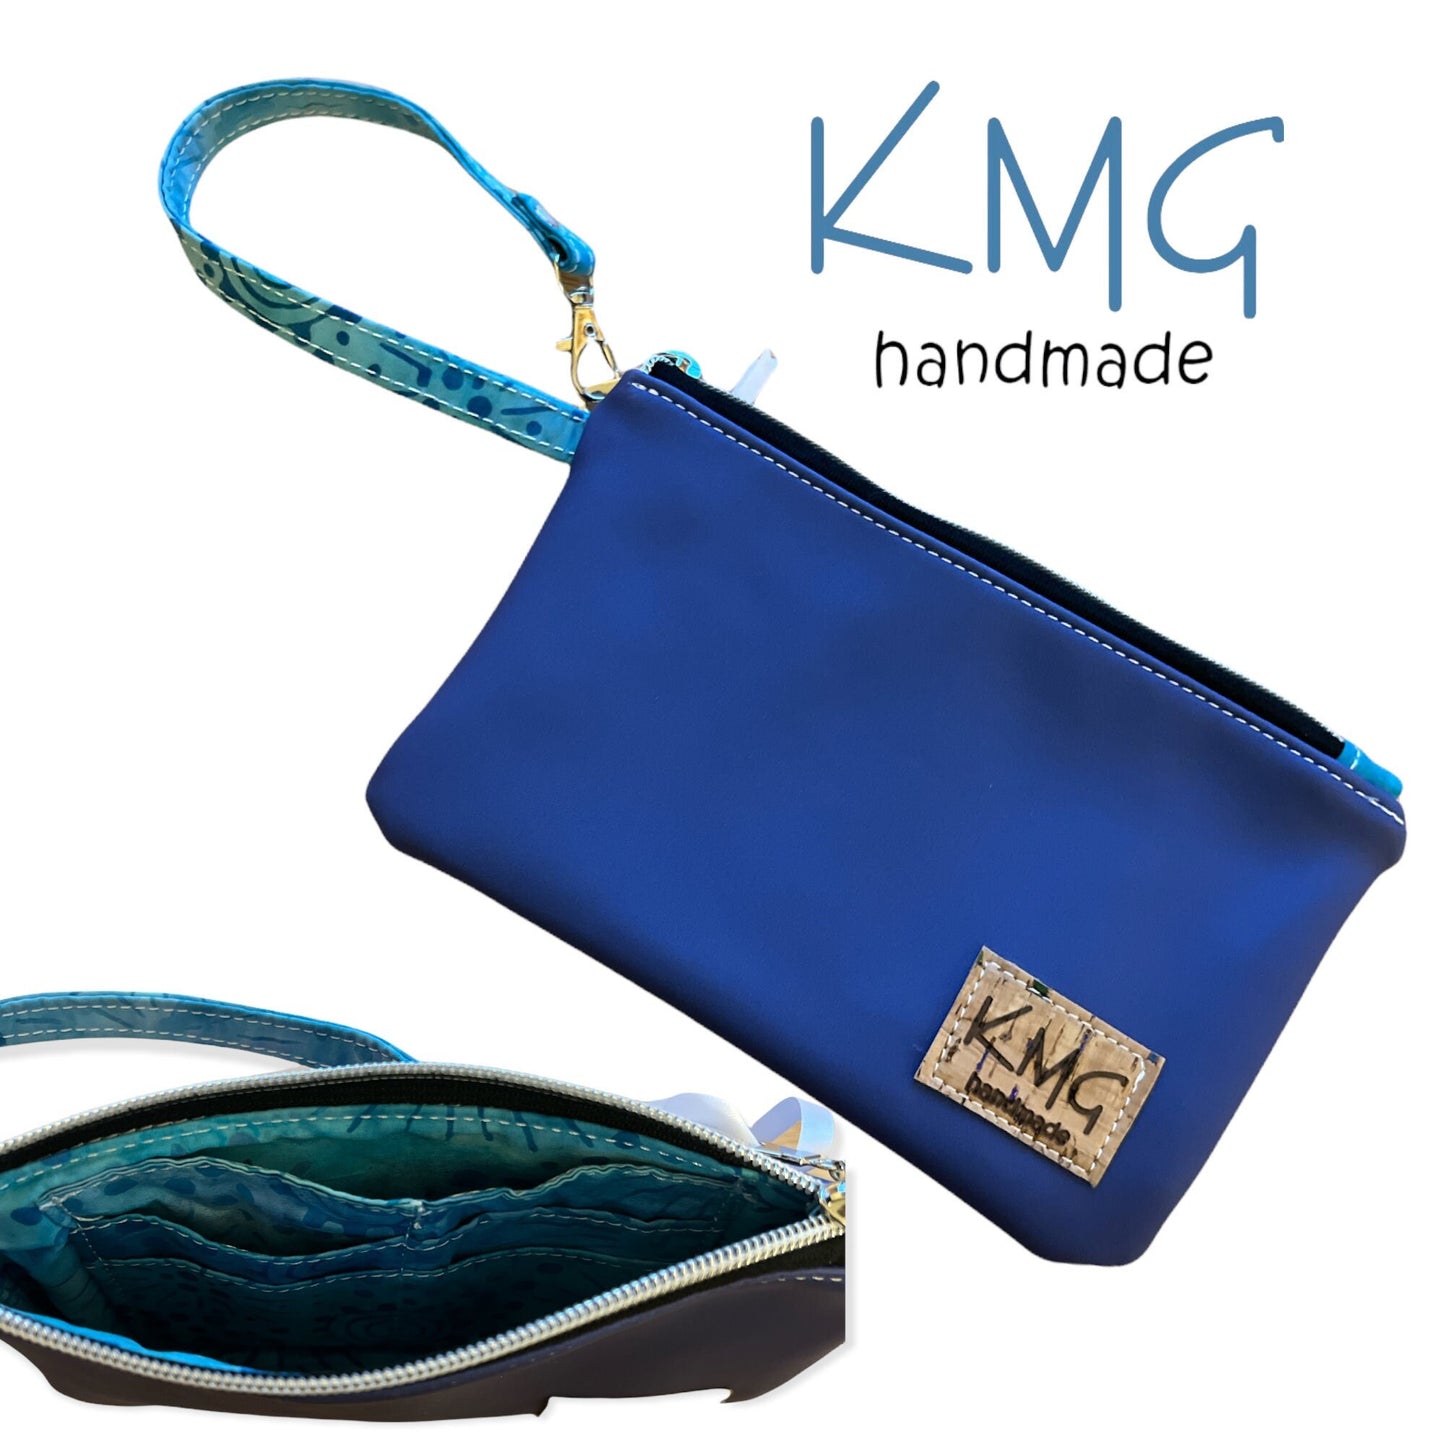 KMGhandmade Original Clip & Zip Wristlets - Group C